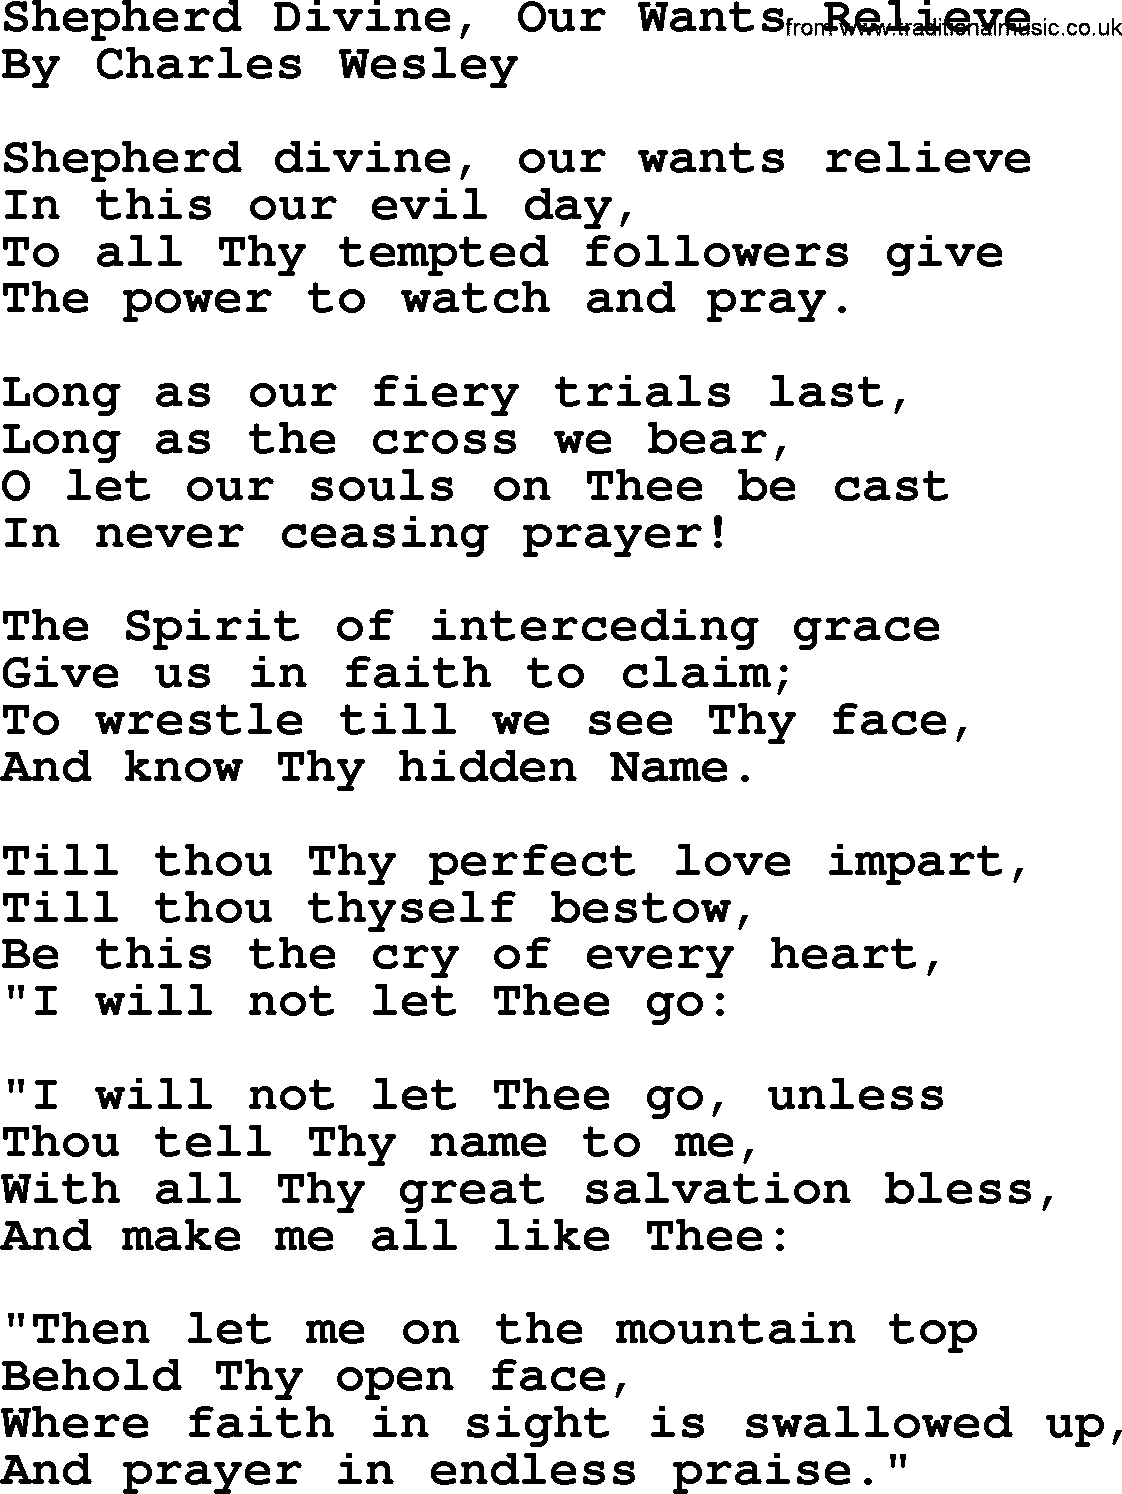 Charles Wesley hymn: Shepherd Divine, Our Wants Relieve, lyrics